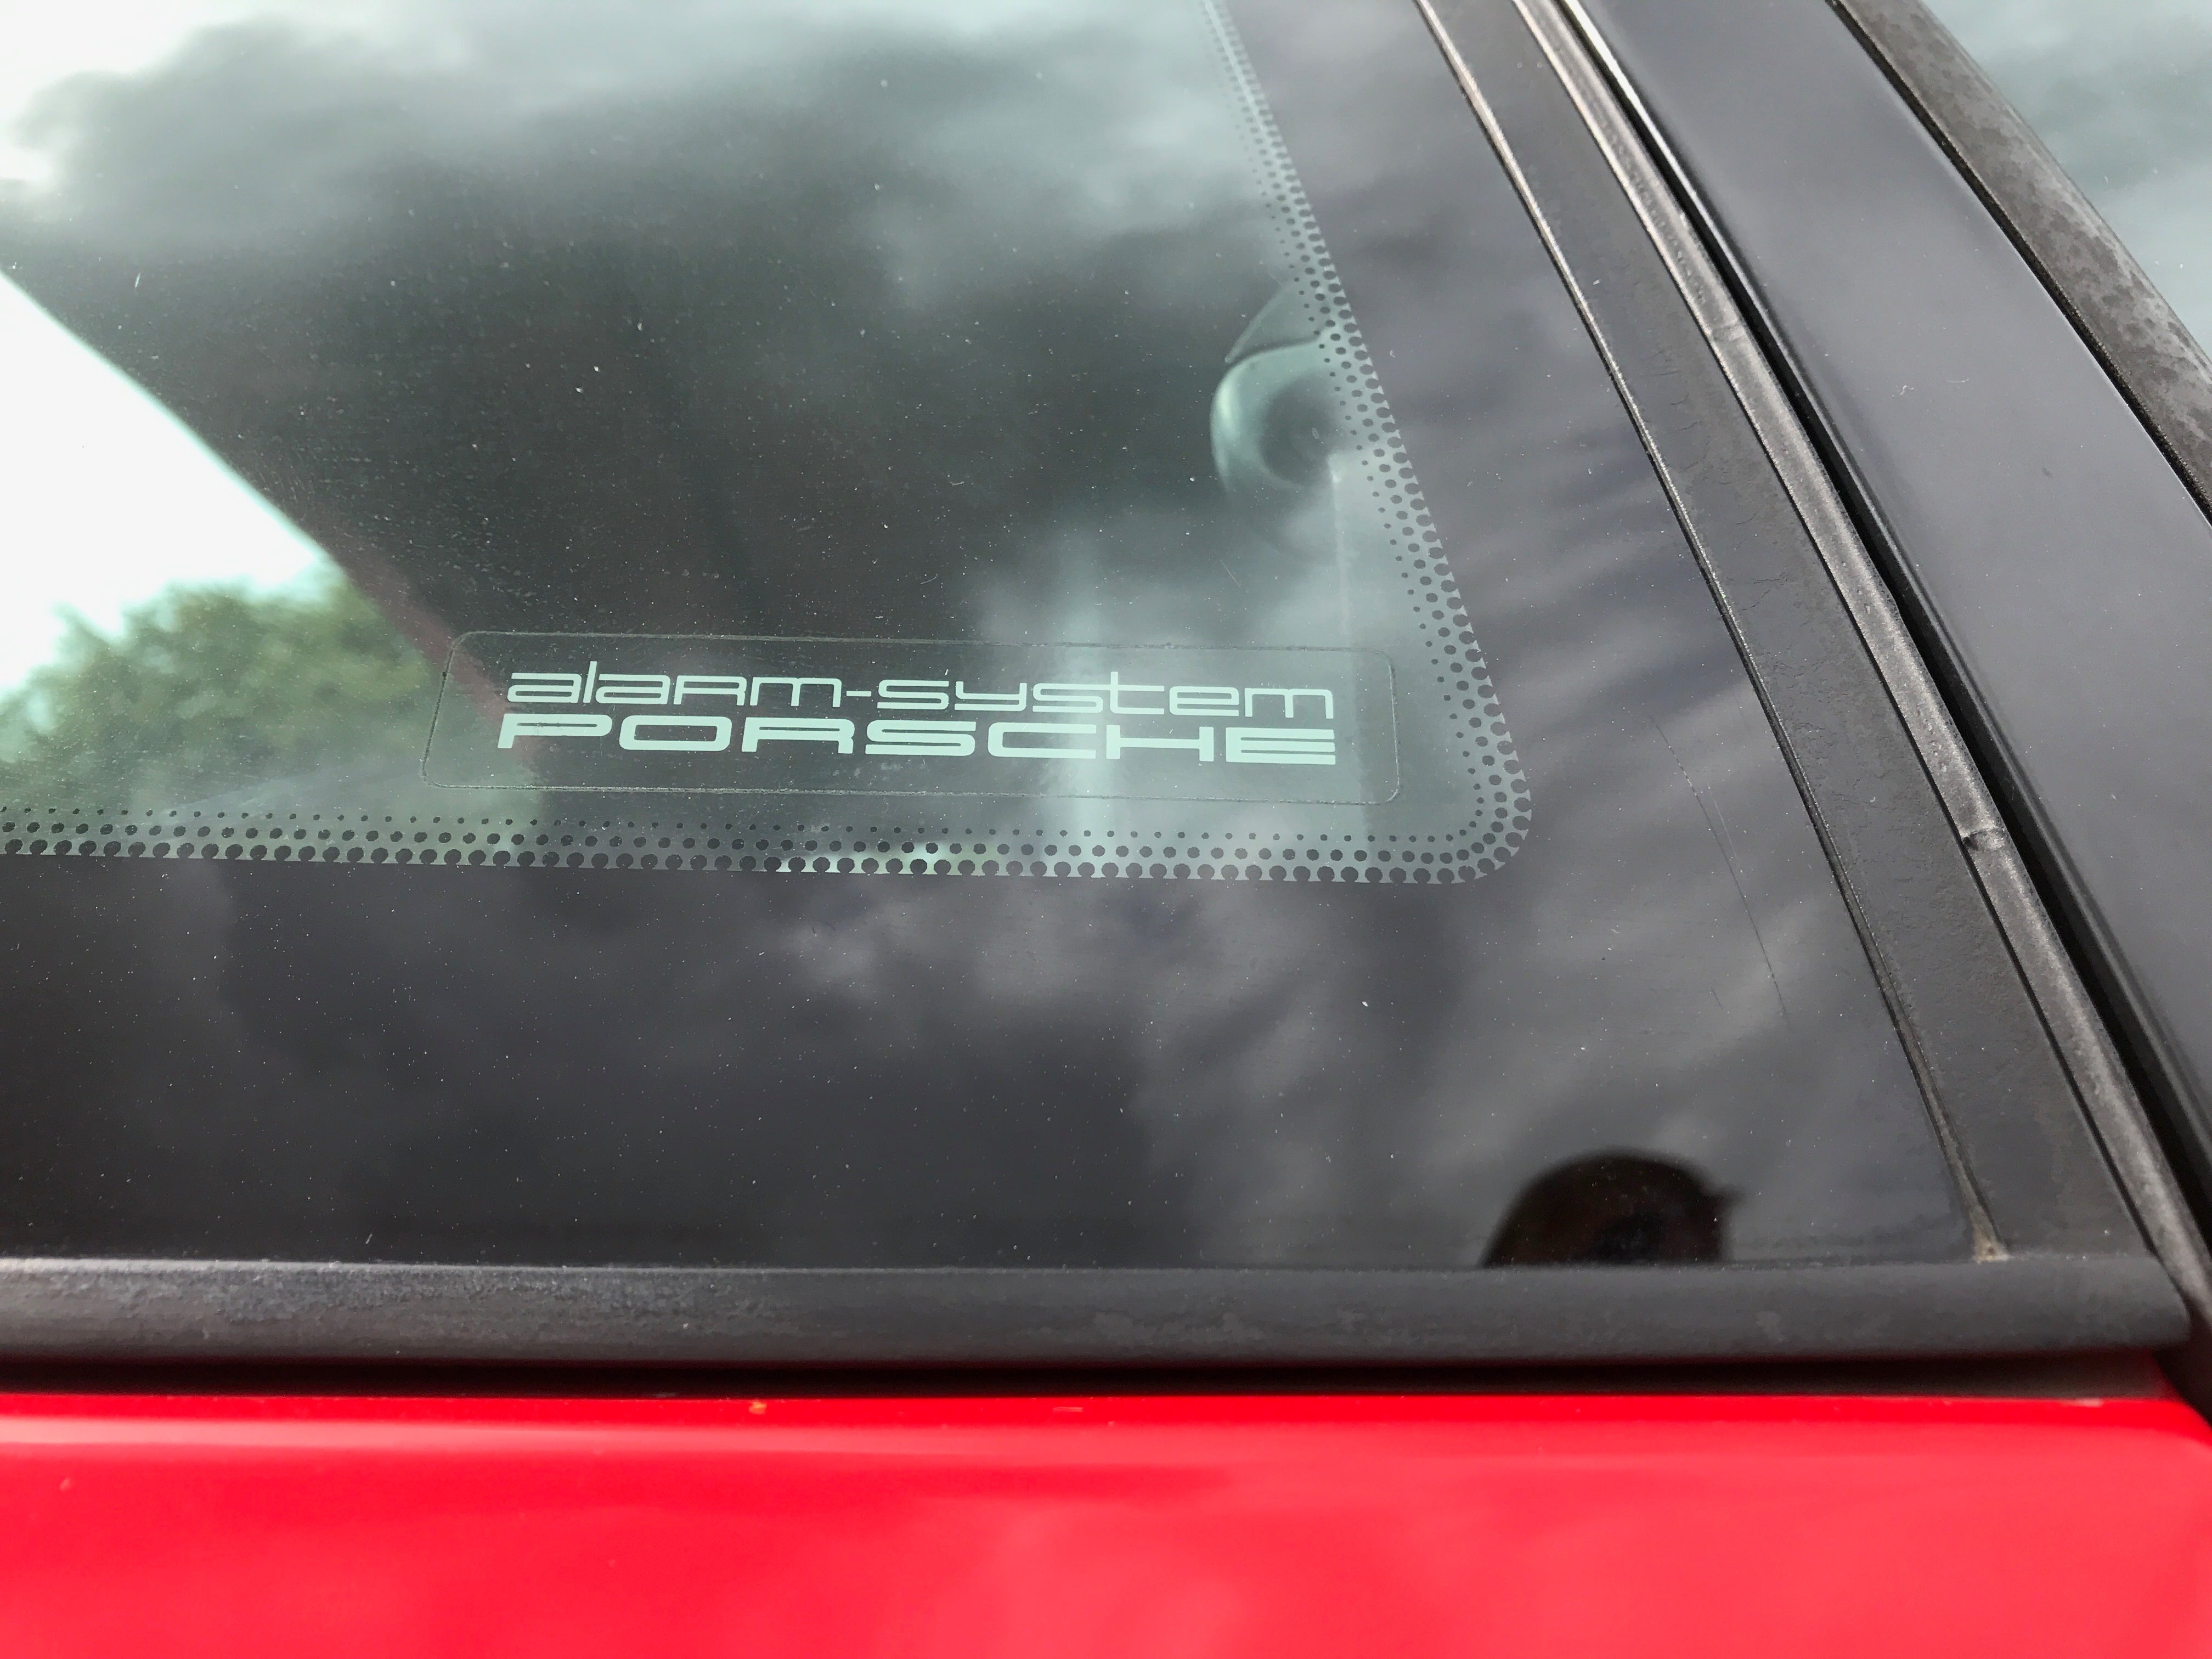 Official Porsche 2x 'Porsche Alarm System' Window Stickers for Porsche 968 Models